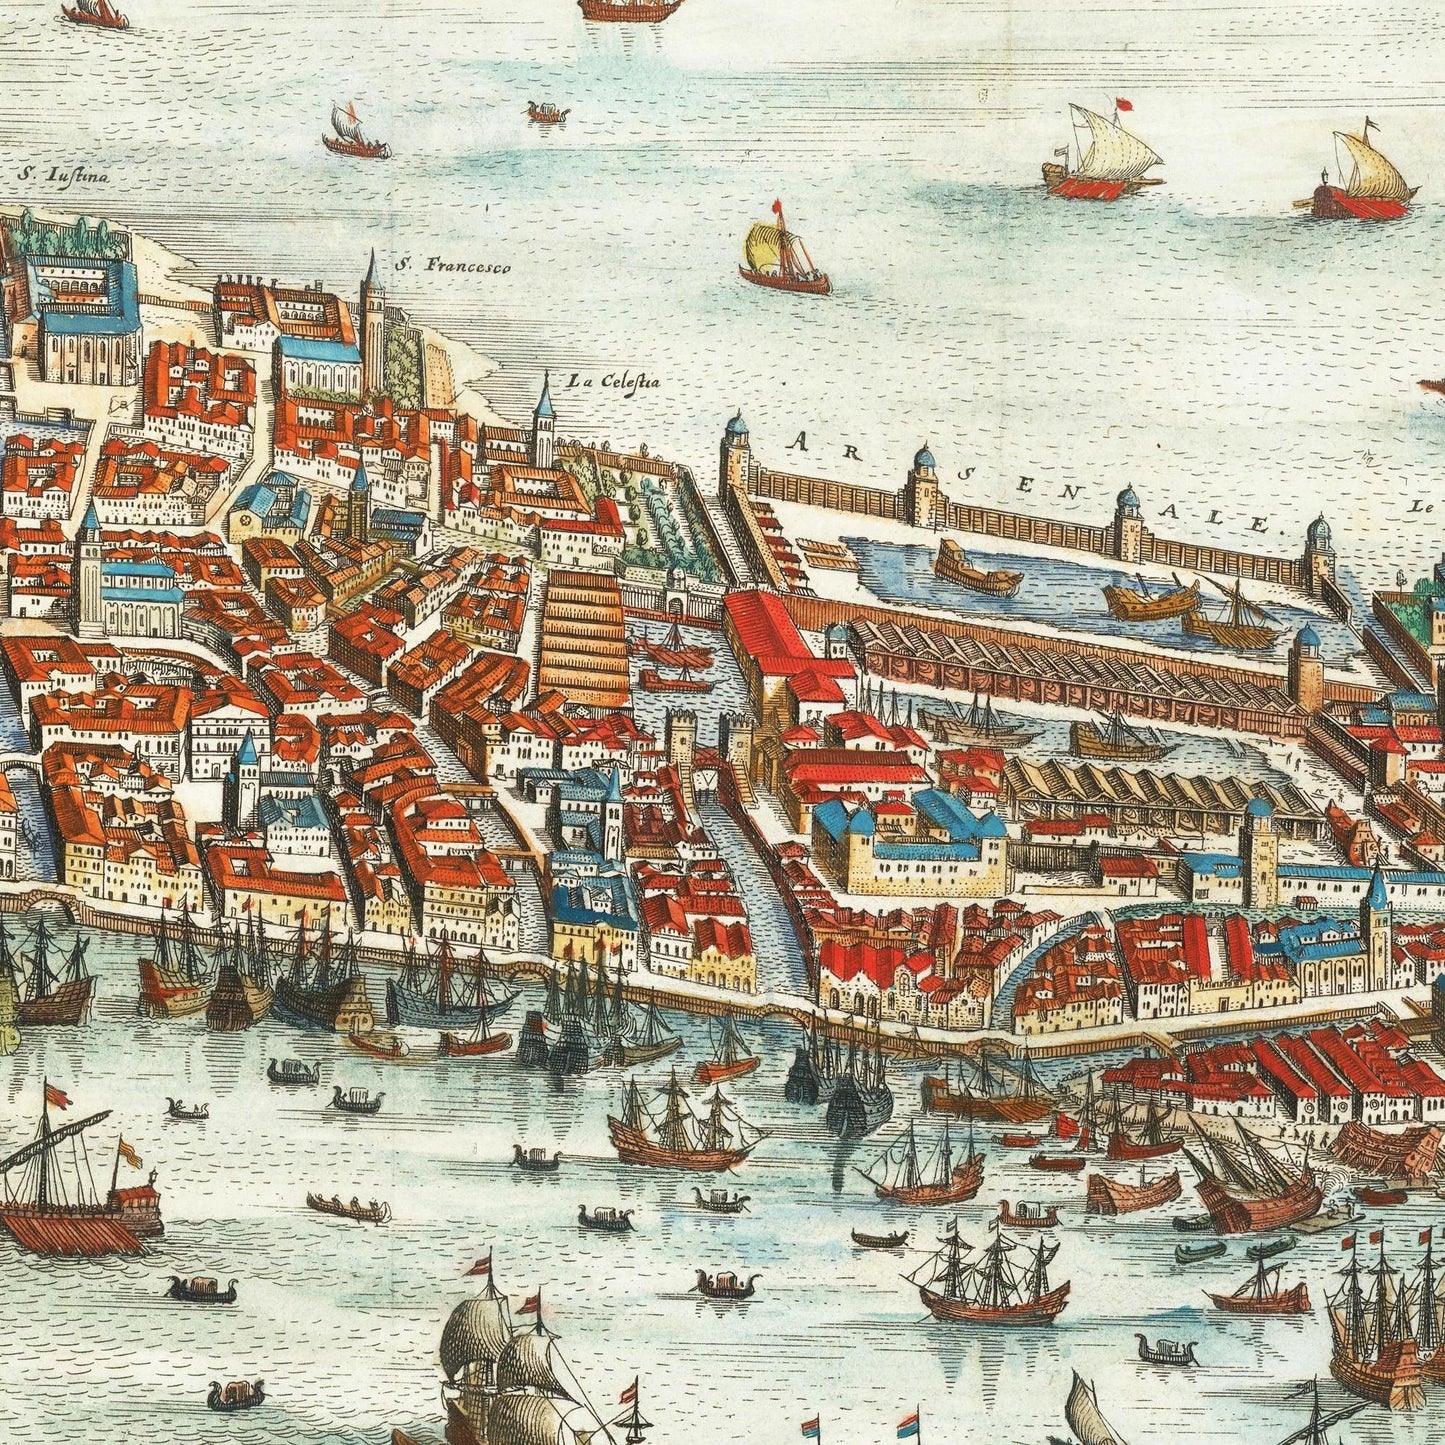 Historische Stadtansicht Venedig um 1636